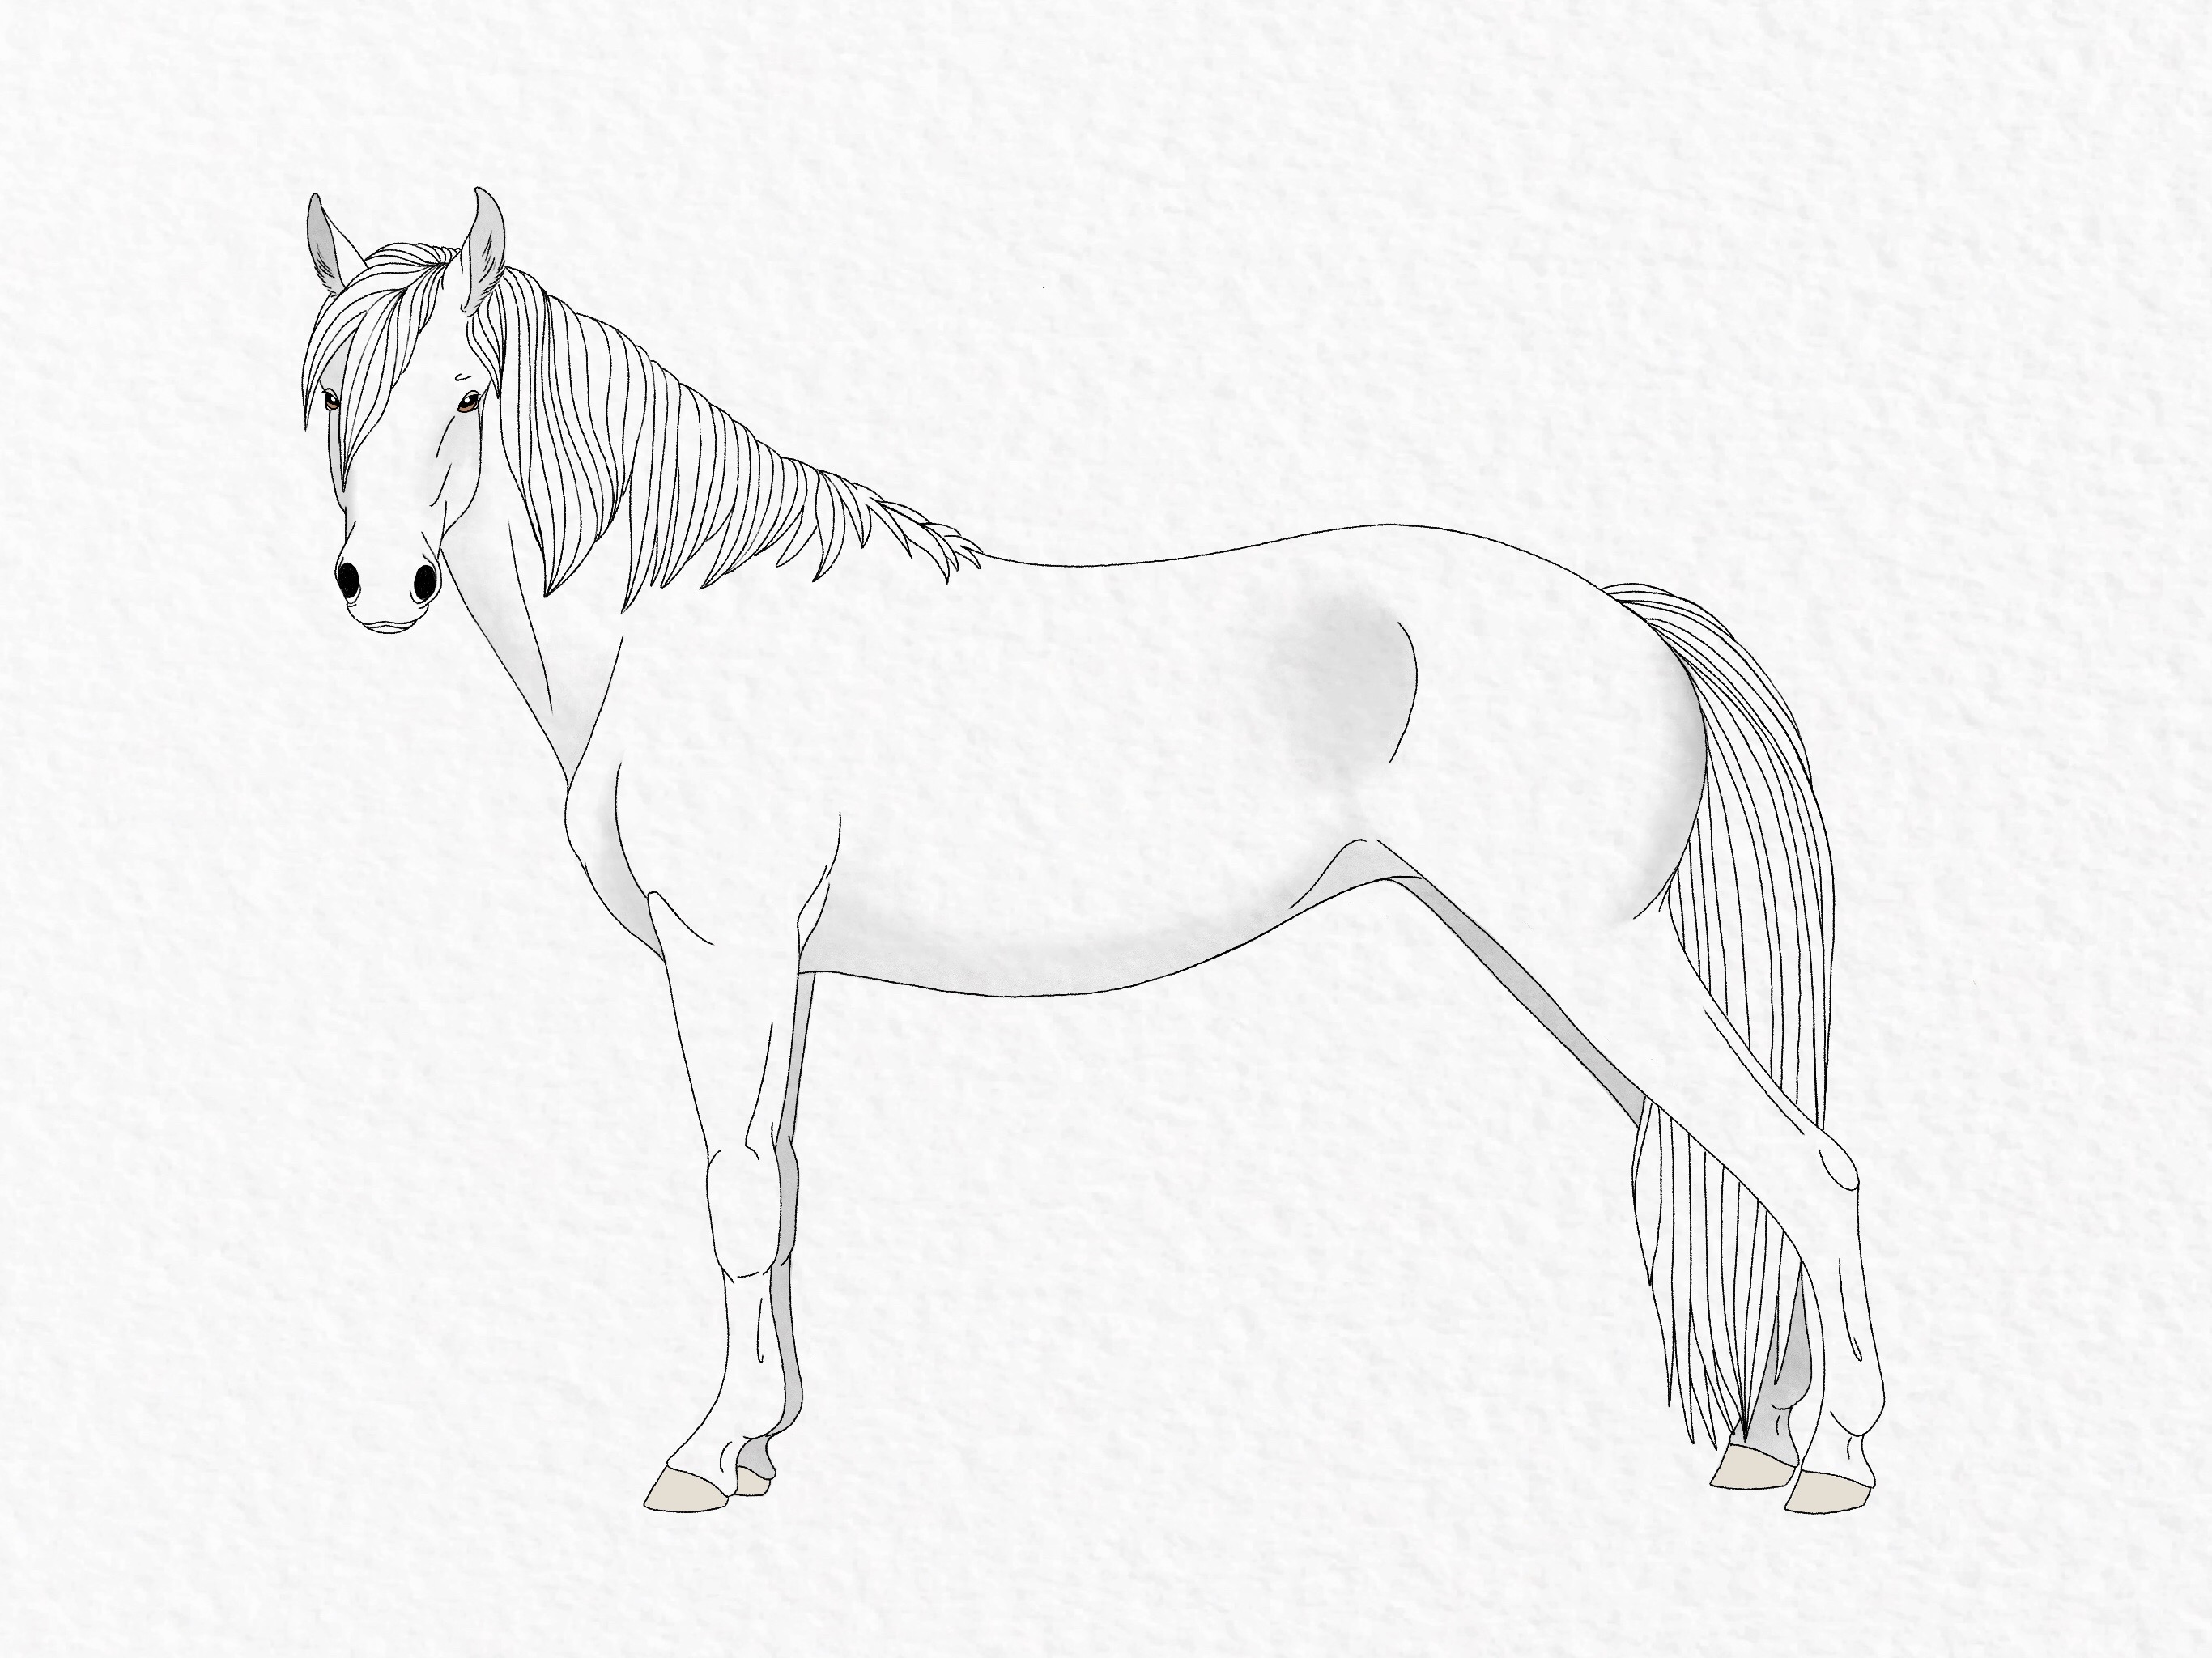 Bucking Horse Sketch in Black